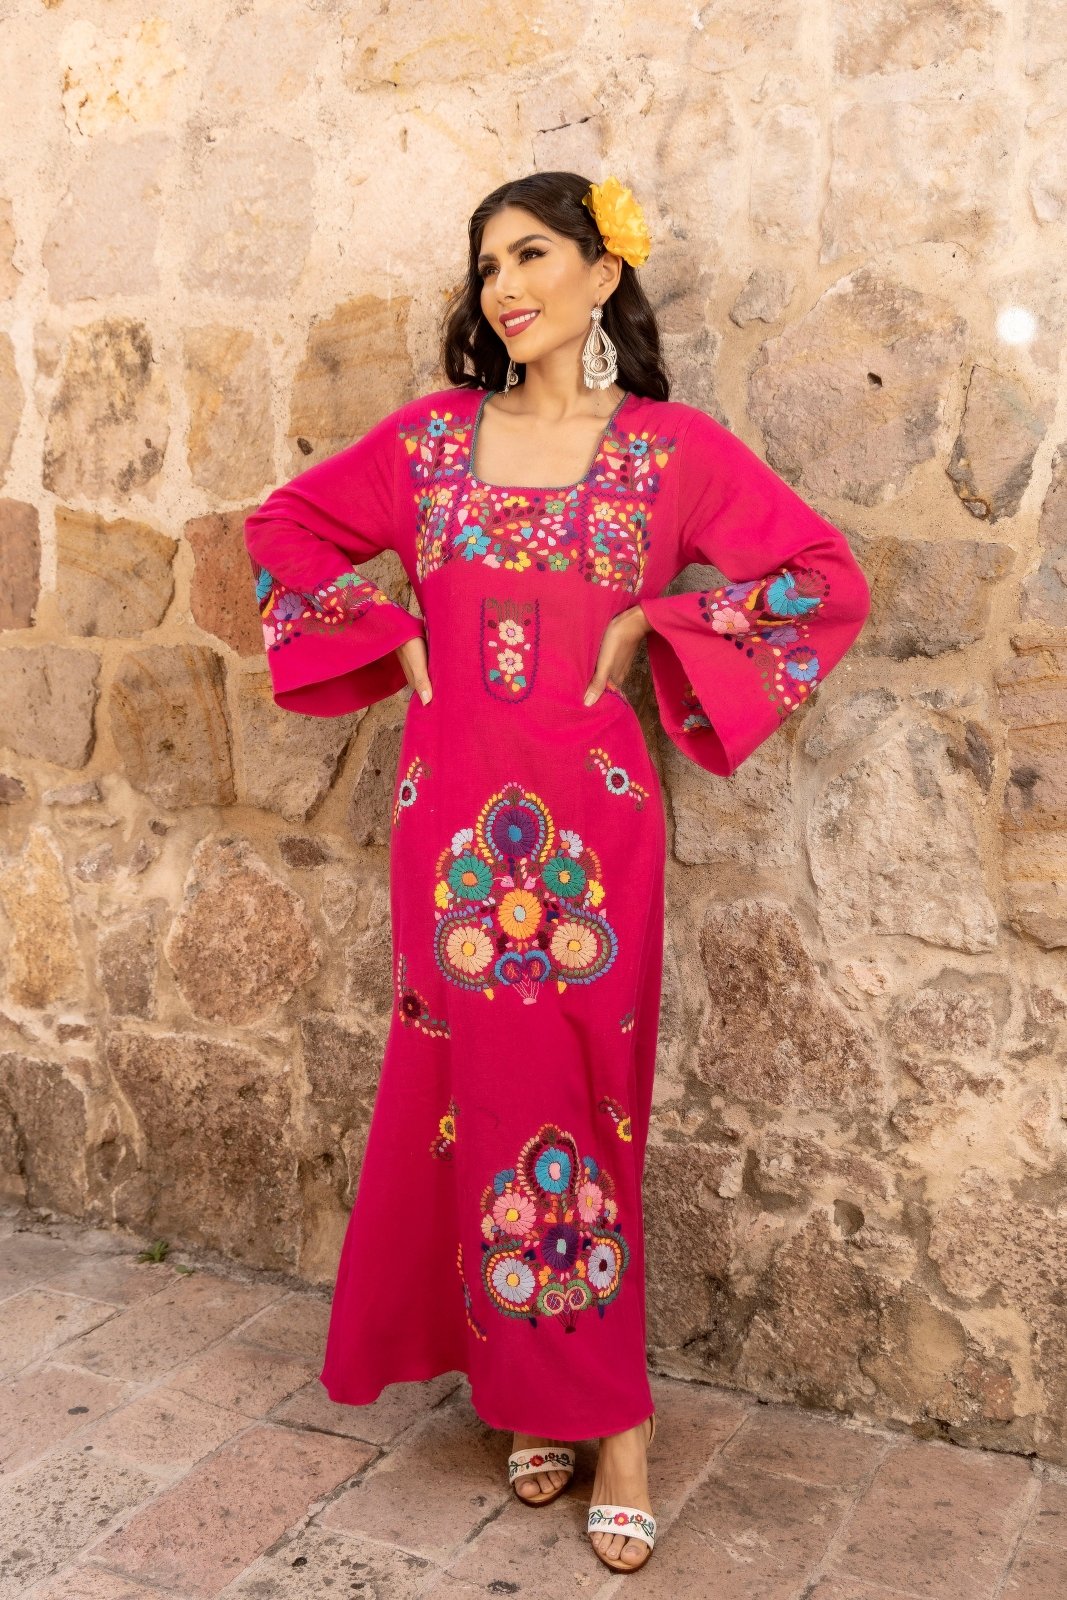 Multicolor Floral Mexican Dress. Fuchsia Dress-Multicolor Floral Design